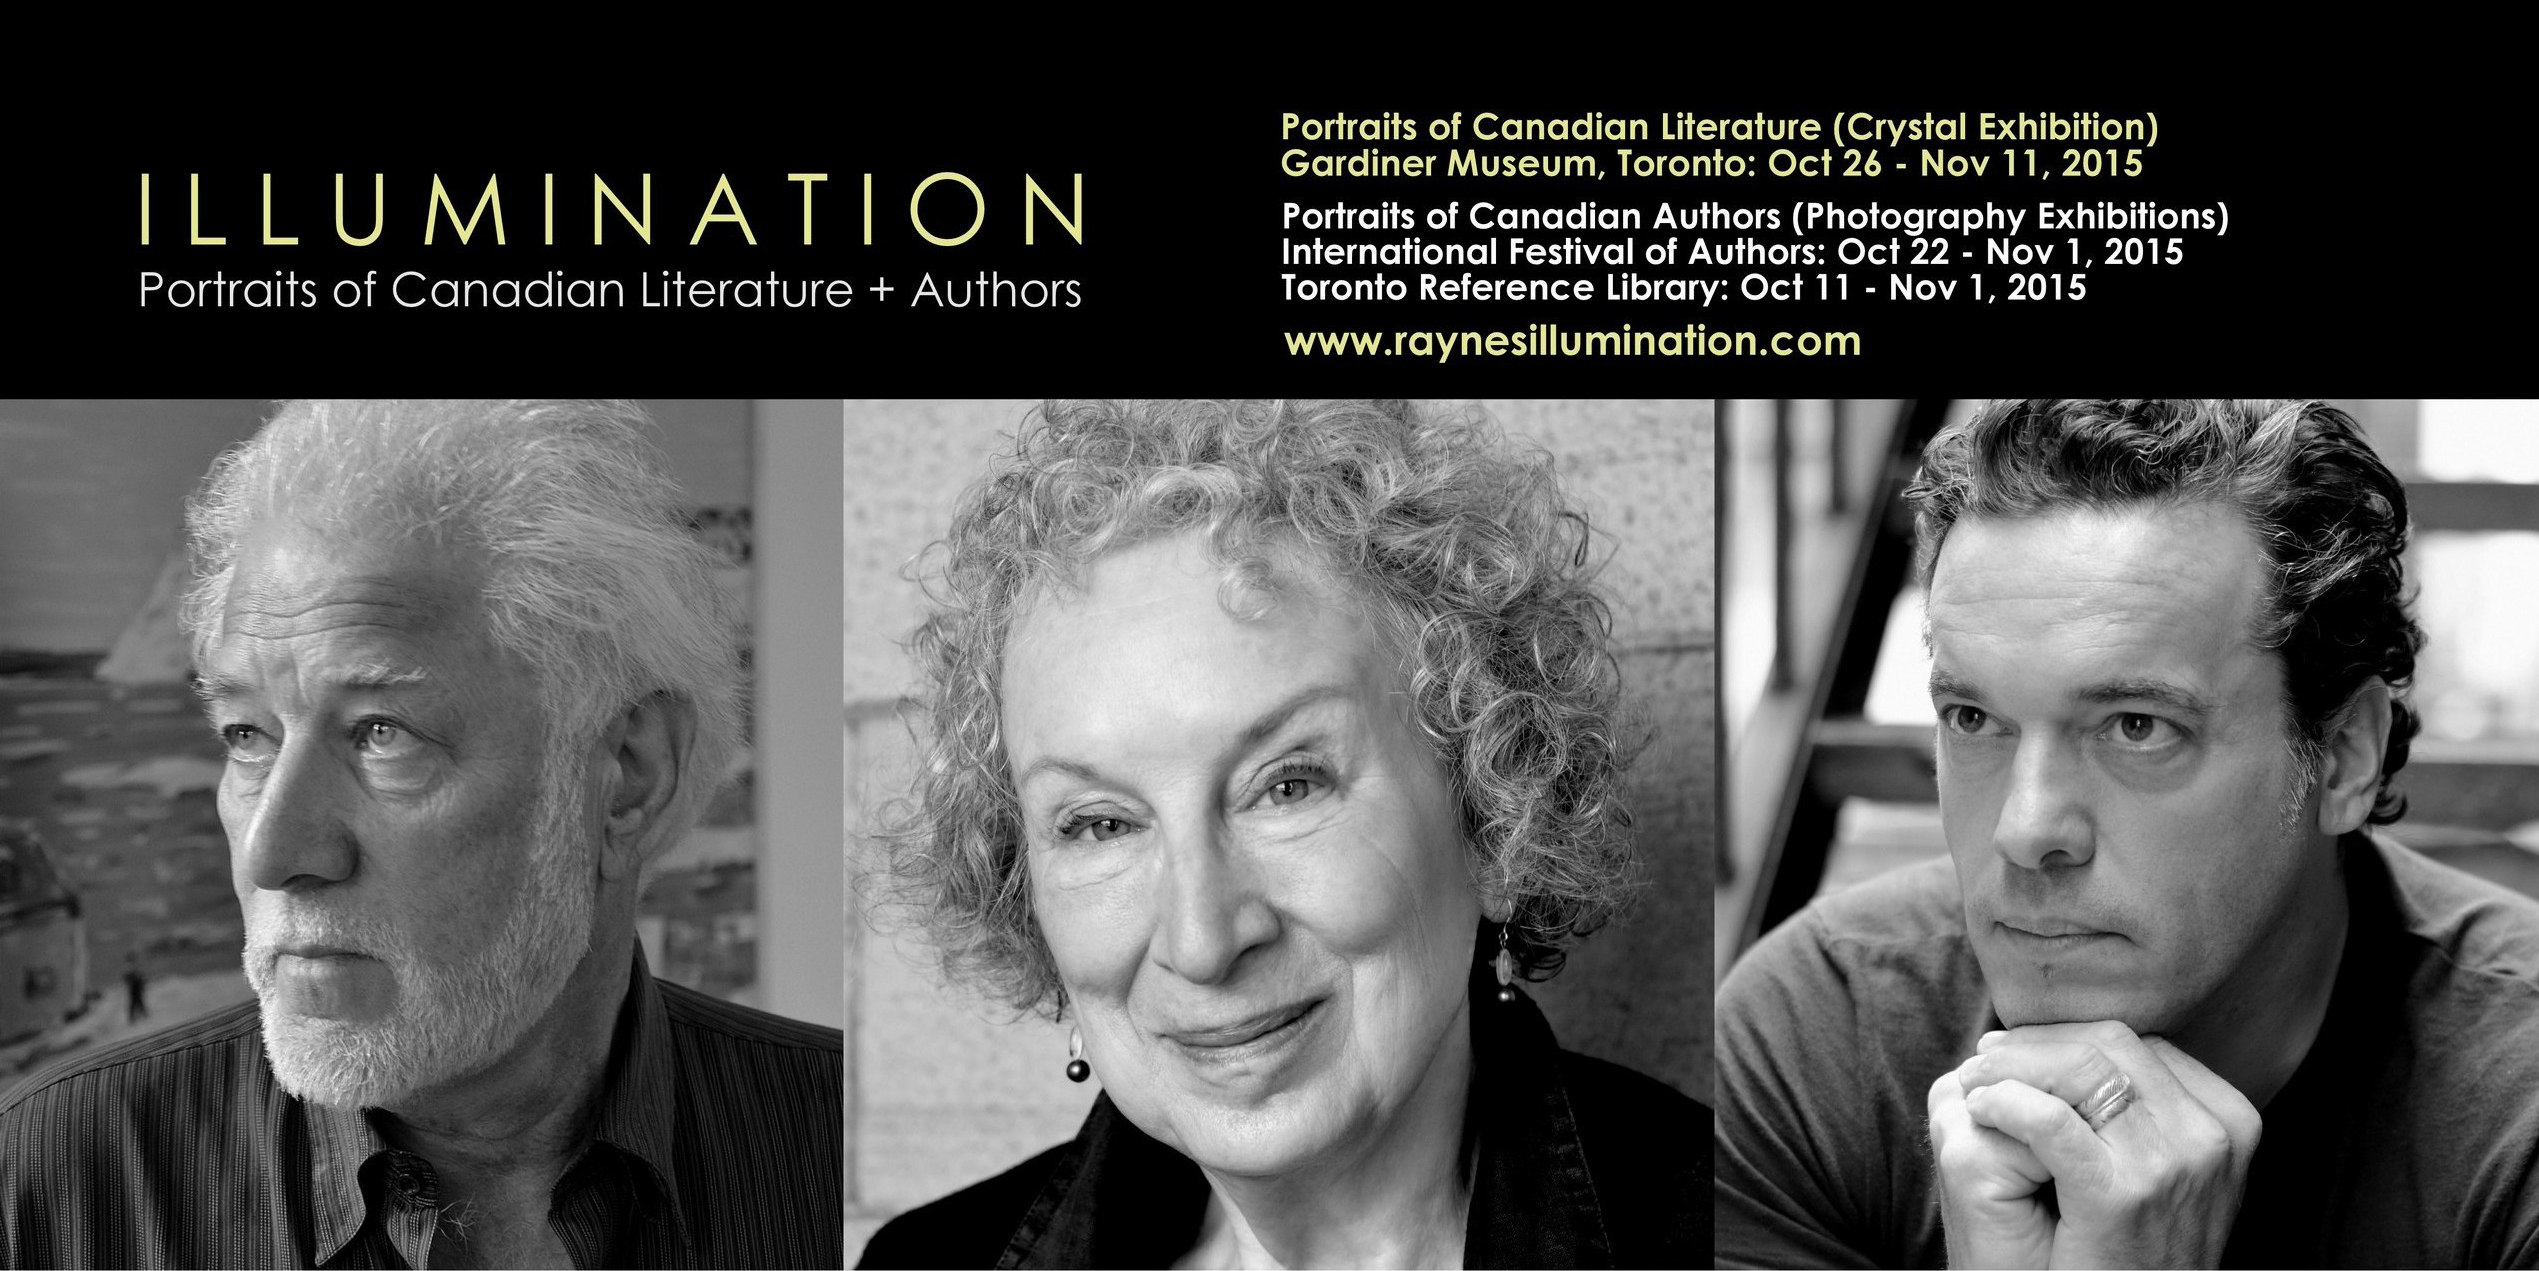 ILLUMINATION: Portraits of Canadian Literature and Authors